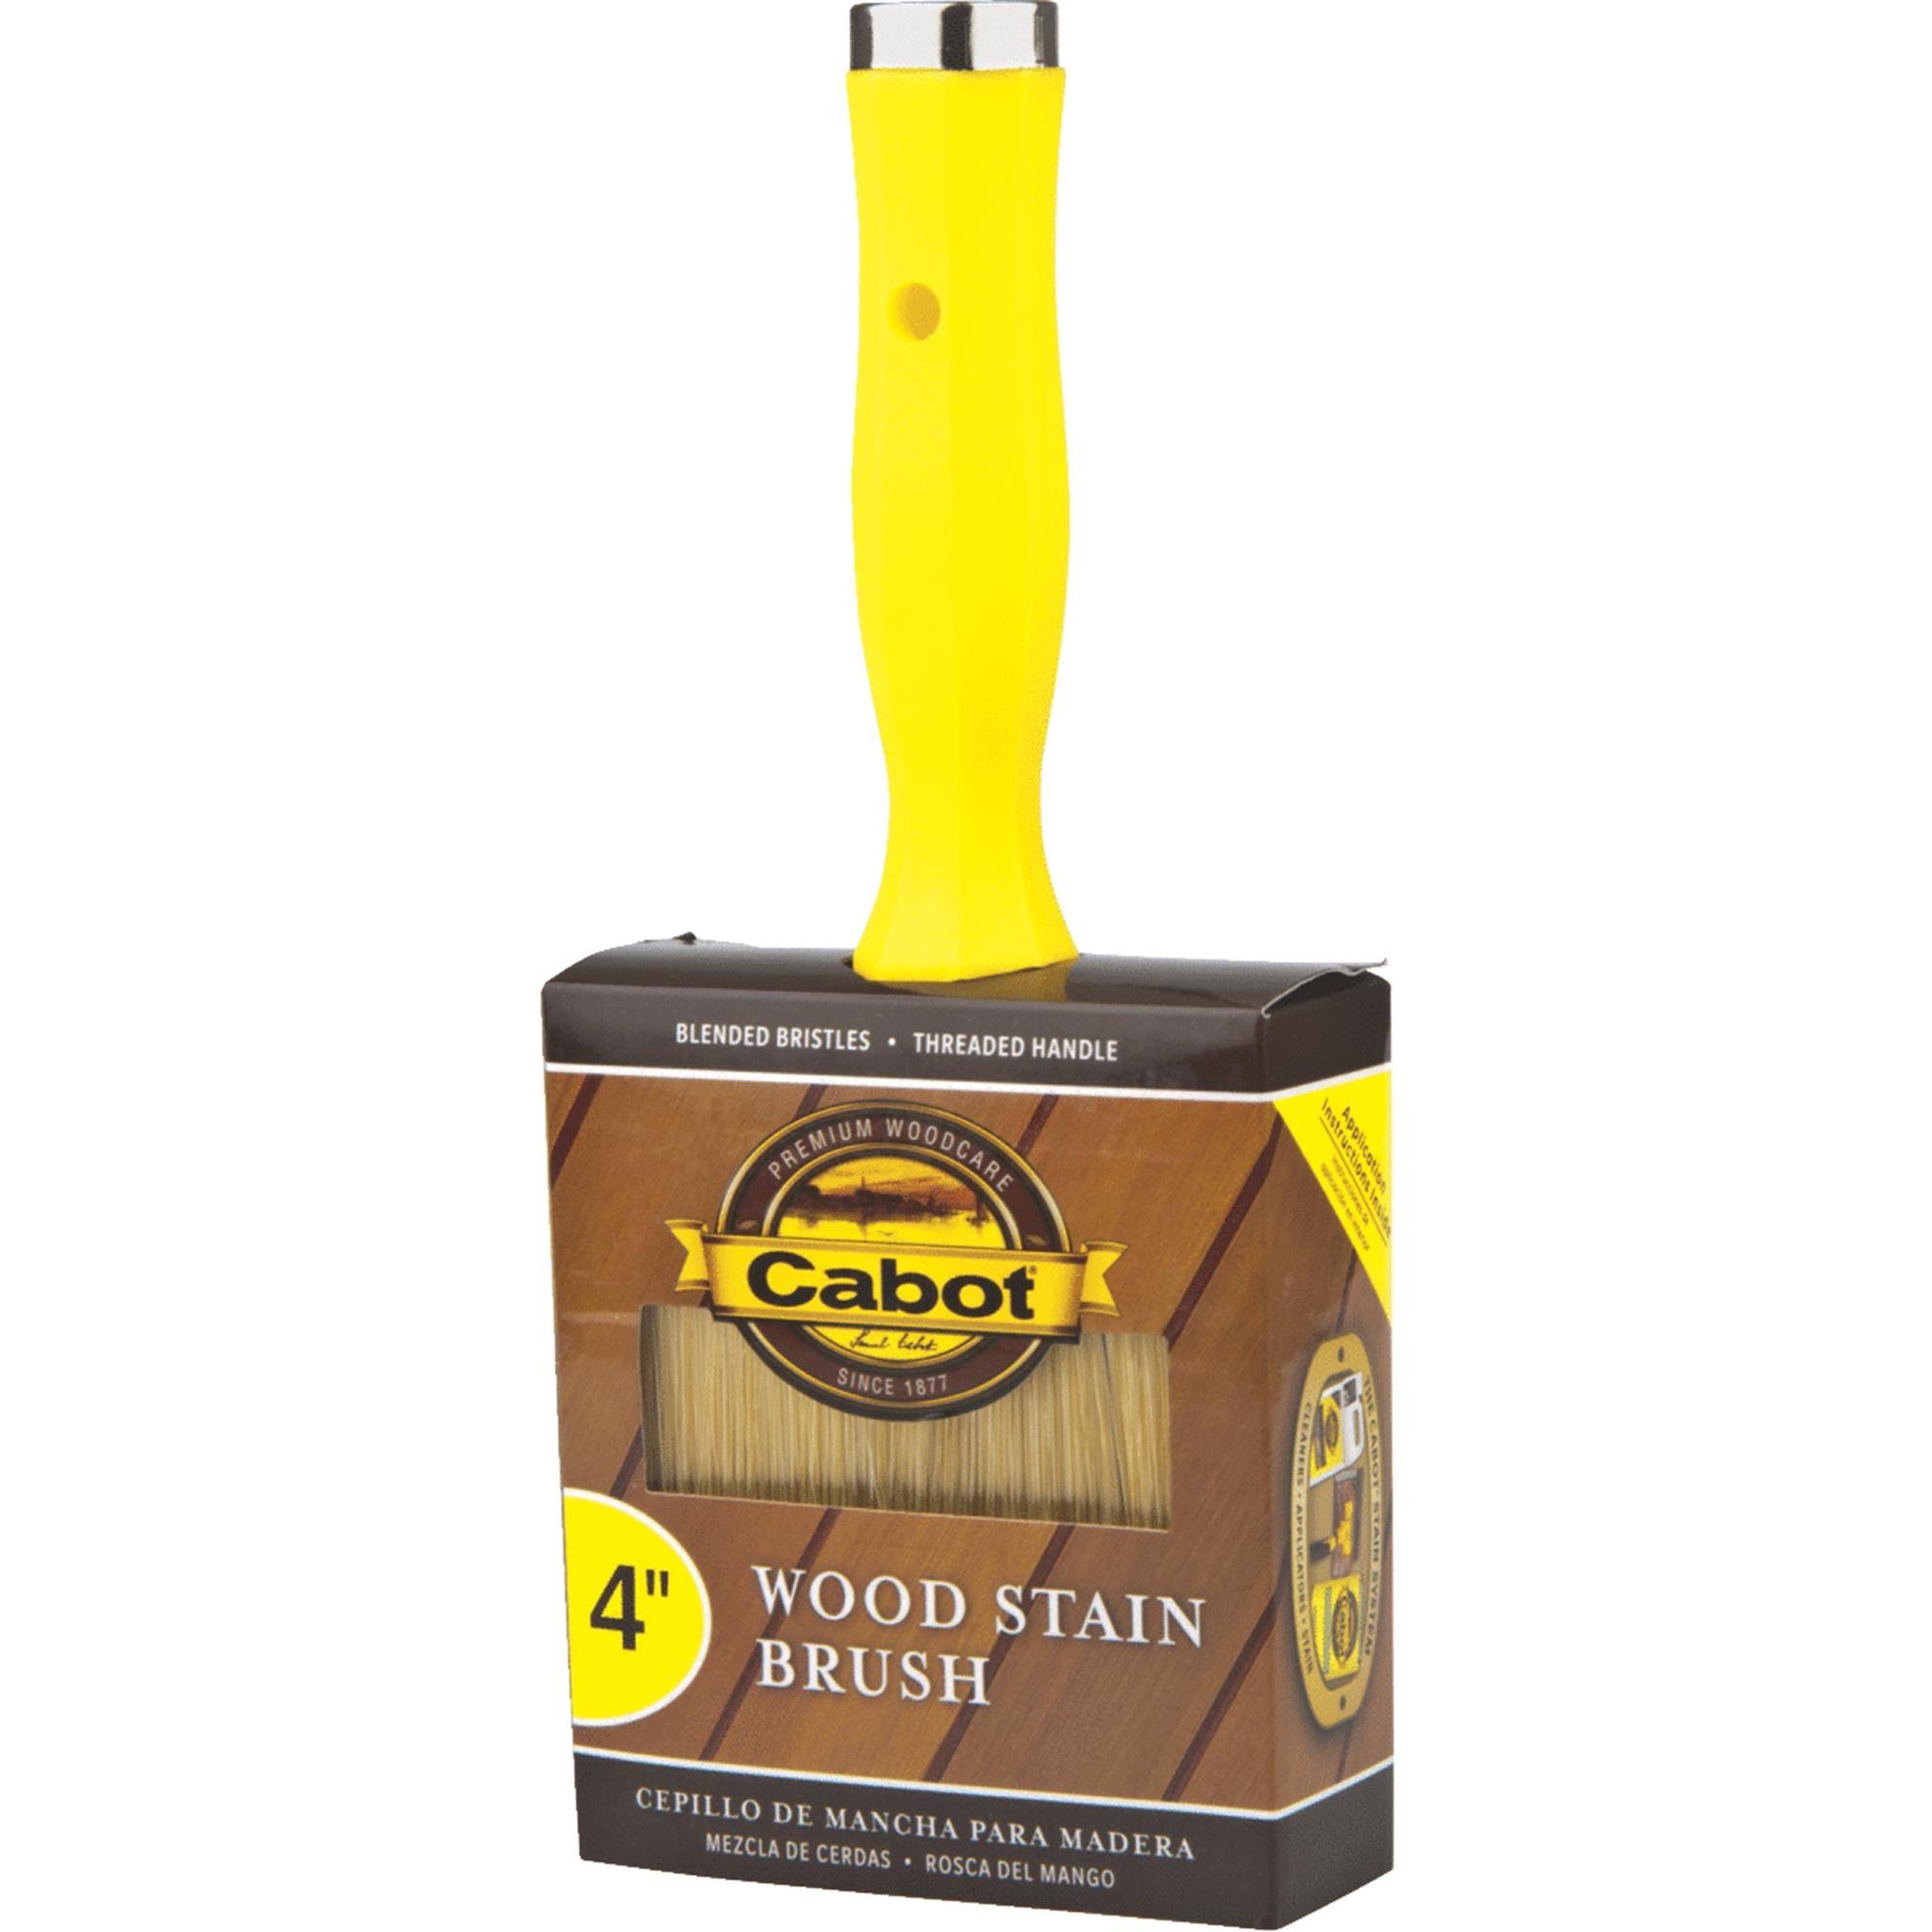 Cabot Wood Stain Brush - 4"